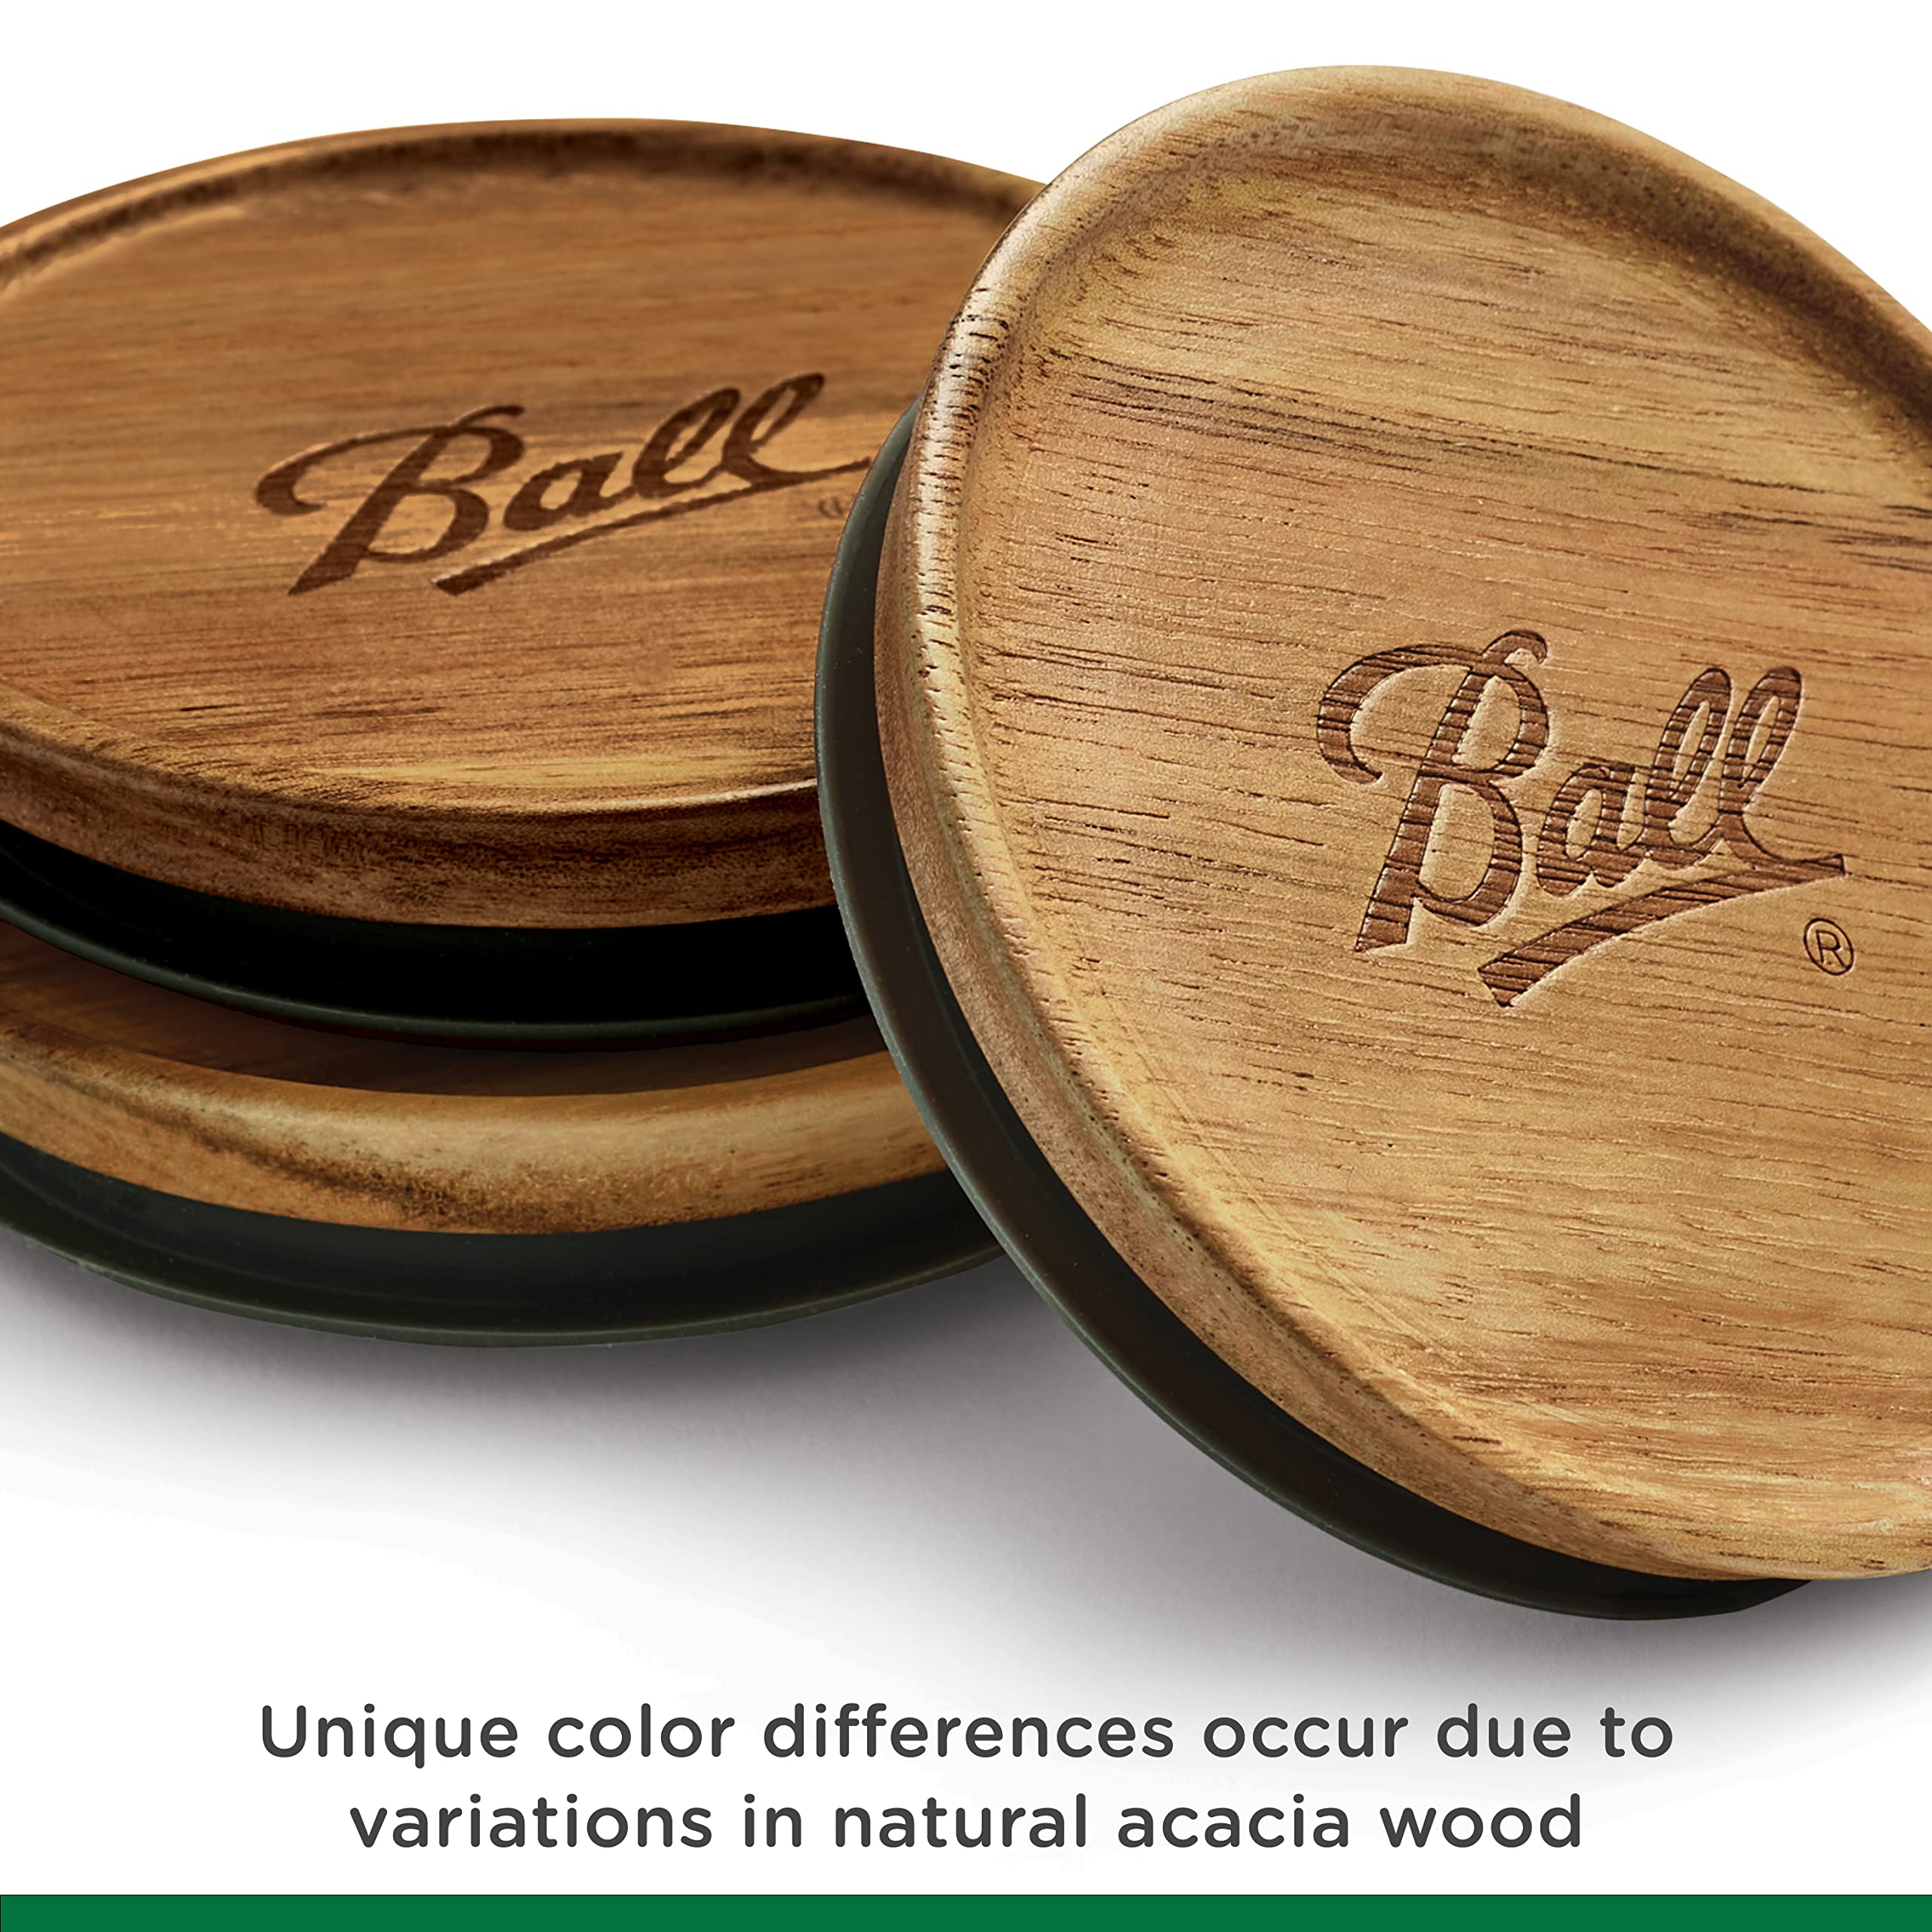 Ball Jar Wooden Storage Lids, 5-Pack, regular, Brown